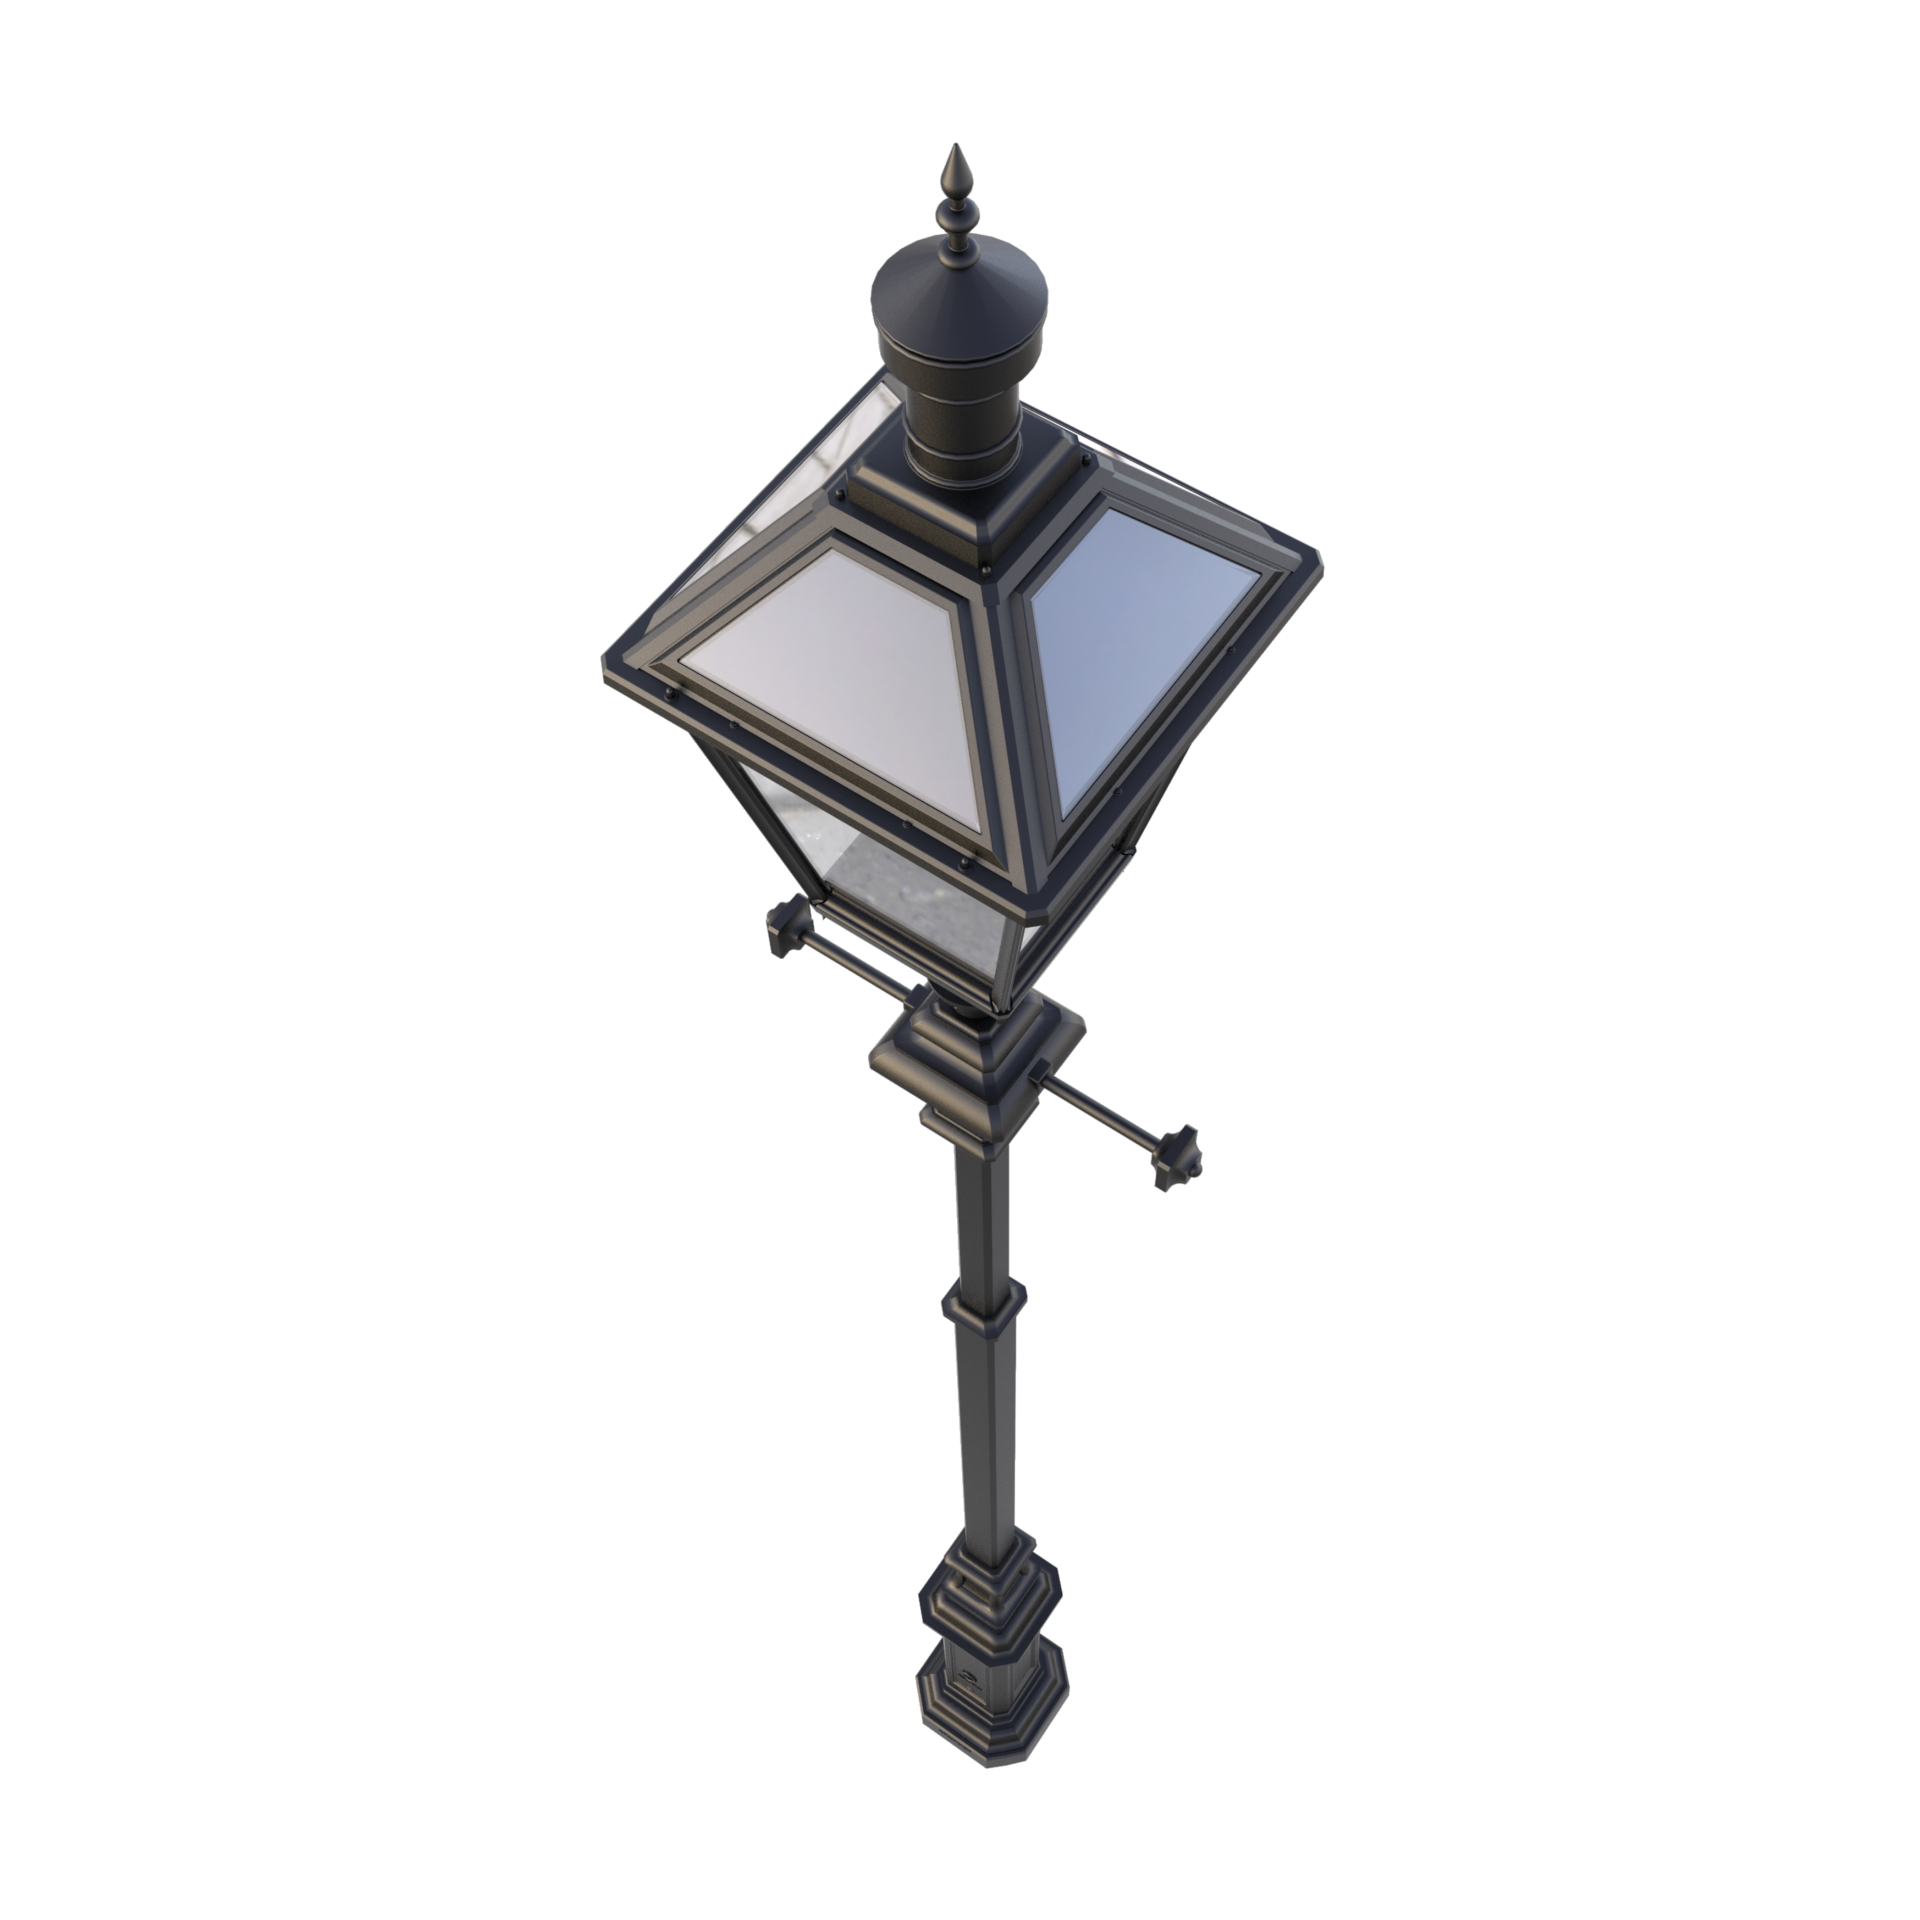 HISTORYGLOW Classic Artistic cast iron lamp post